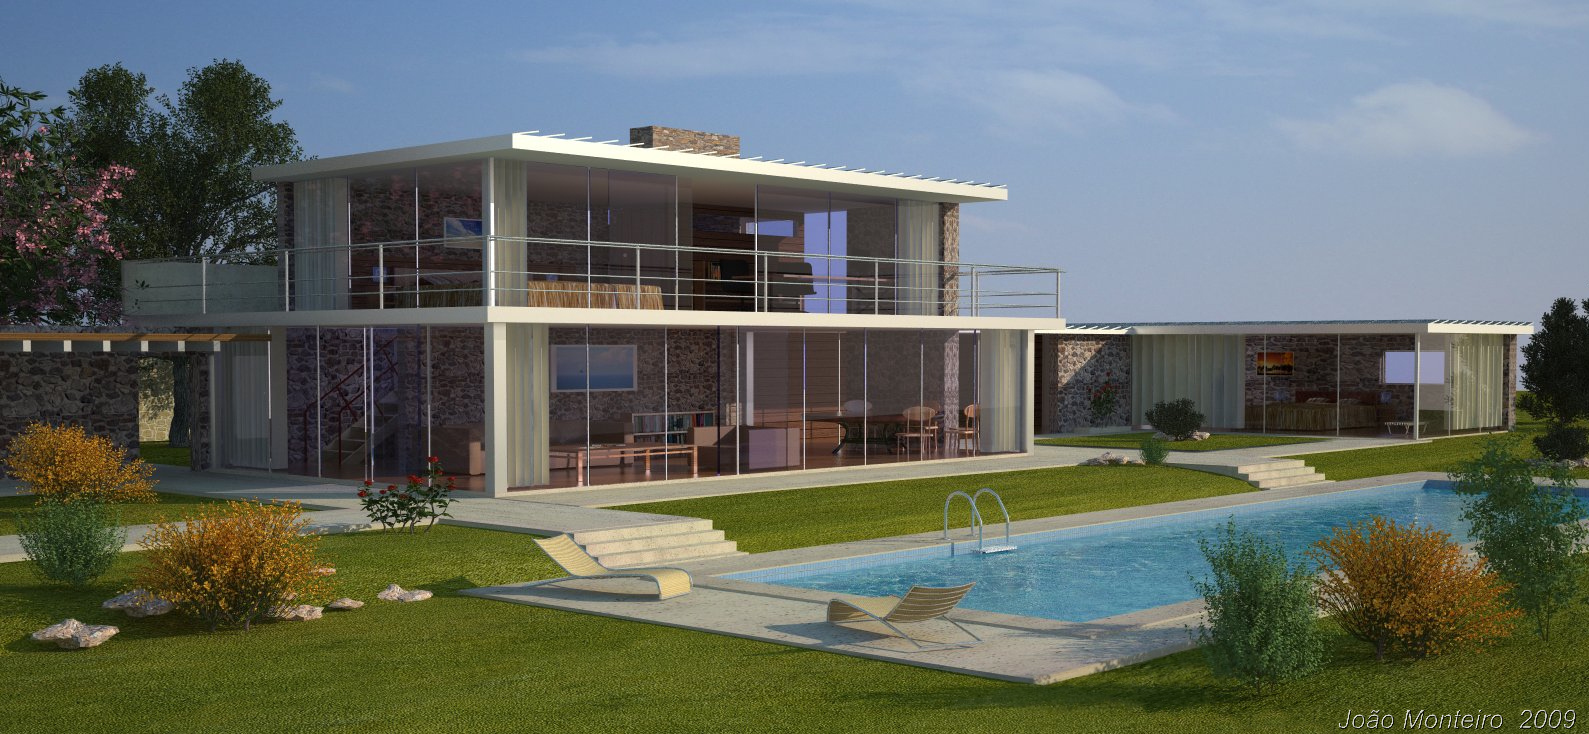 Modern house design and render done using Rhinoceros 